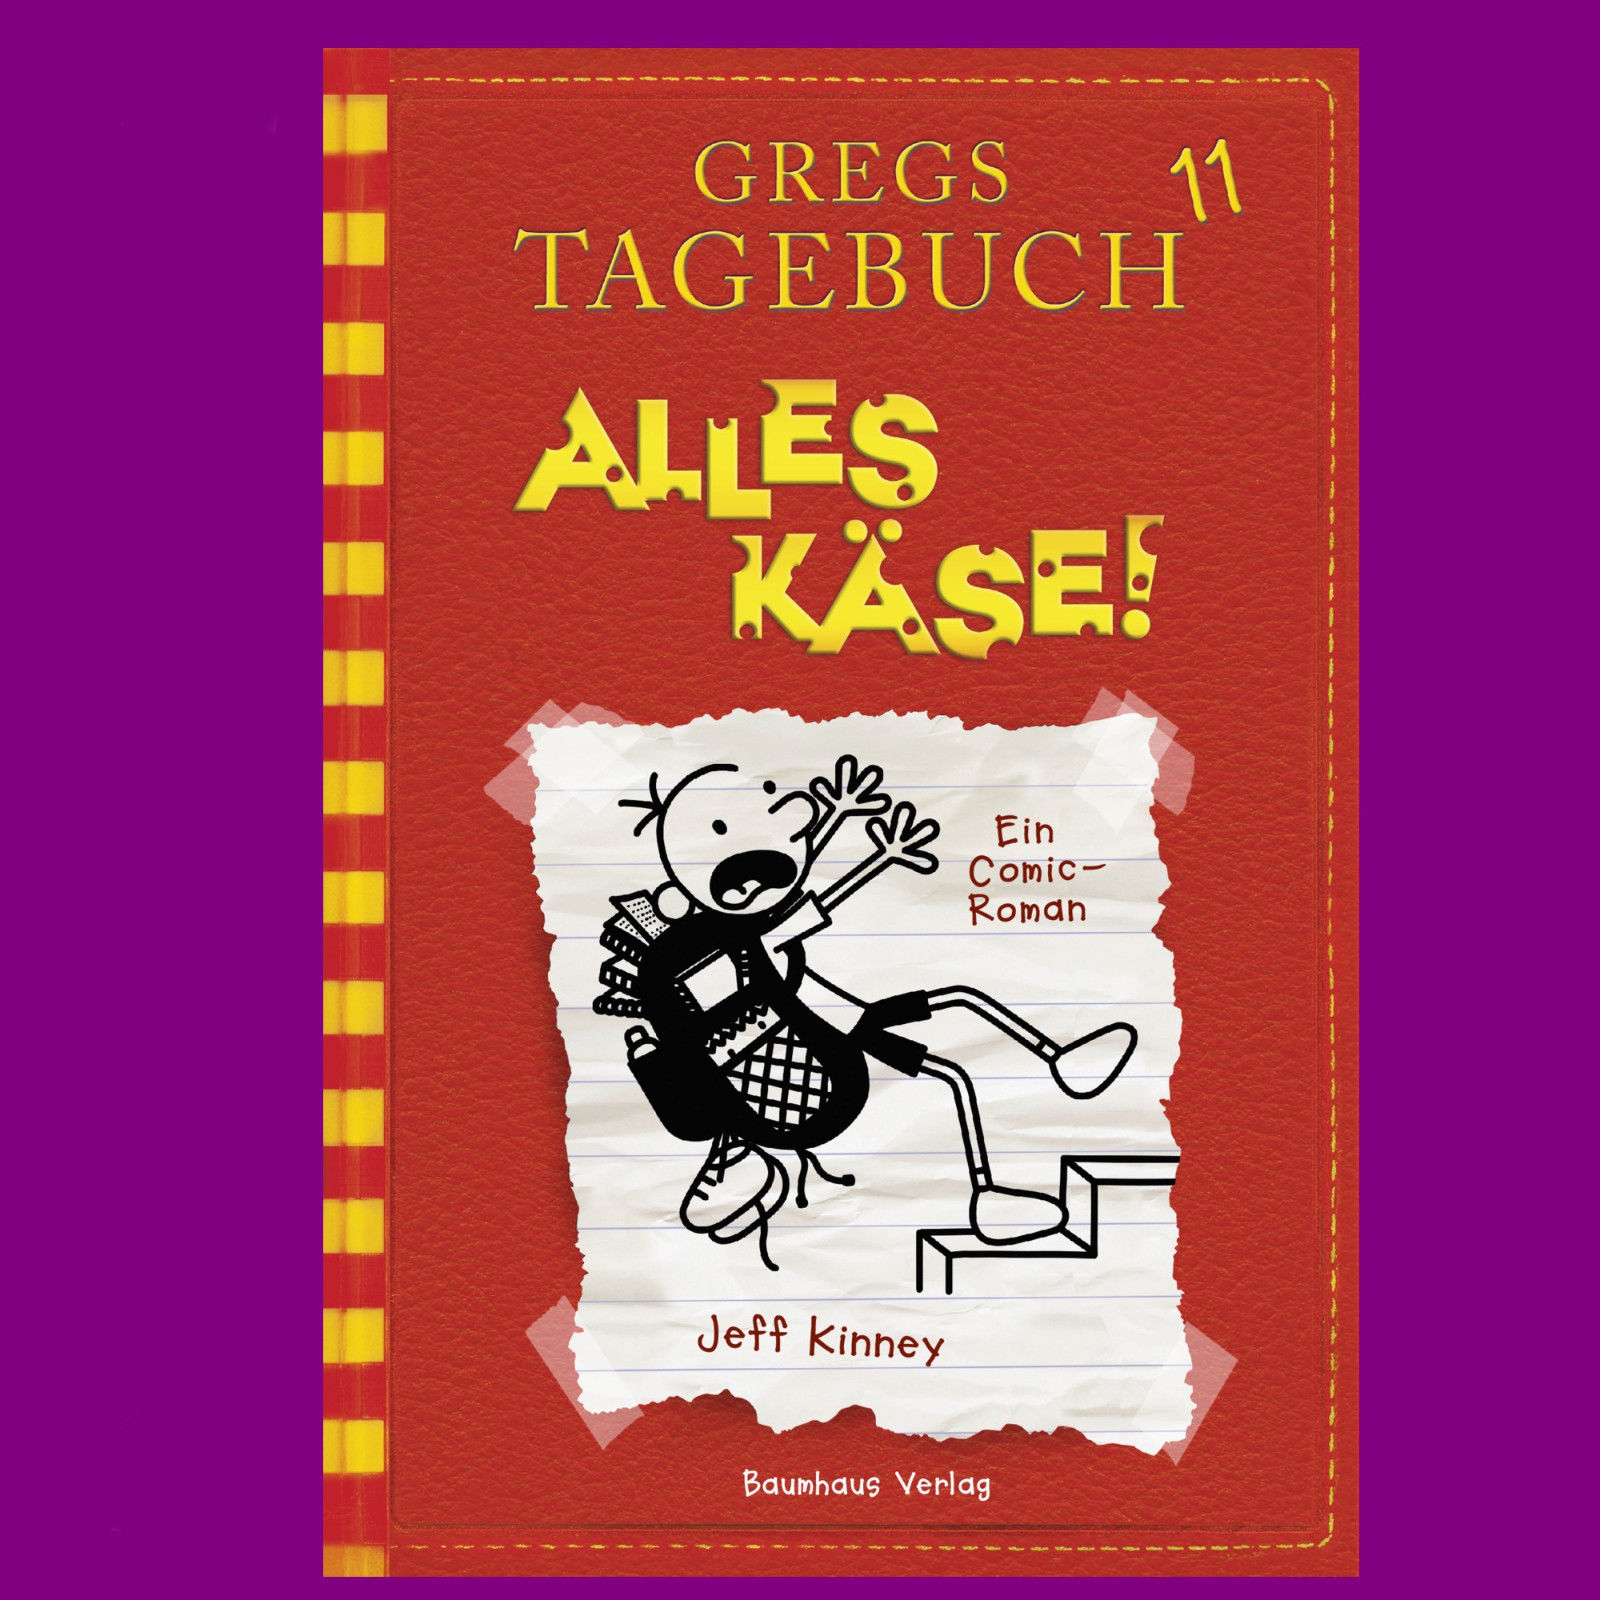 Jeff Kinney - Alles Käse! - Gregs Tagebuch Band 11 - Buch - Neu